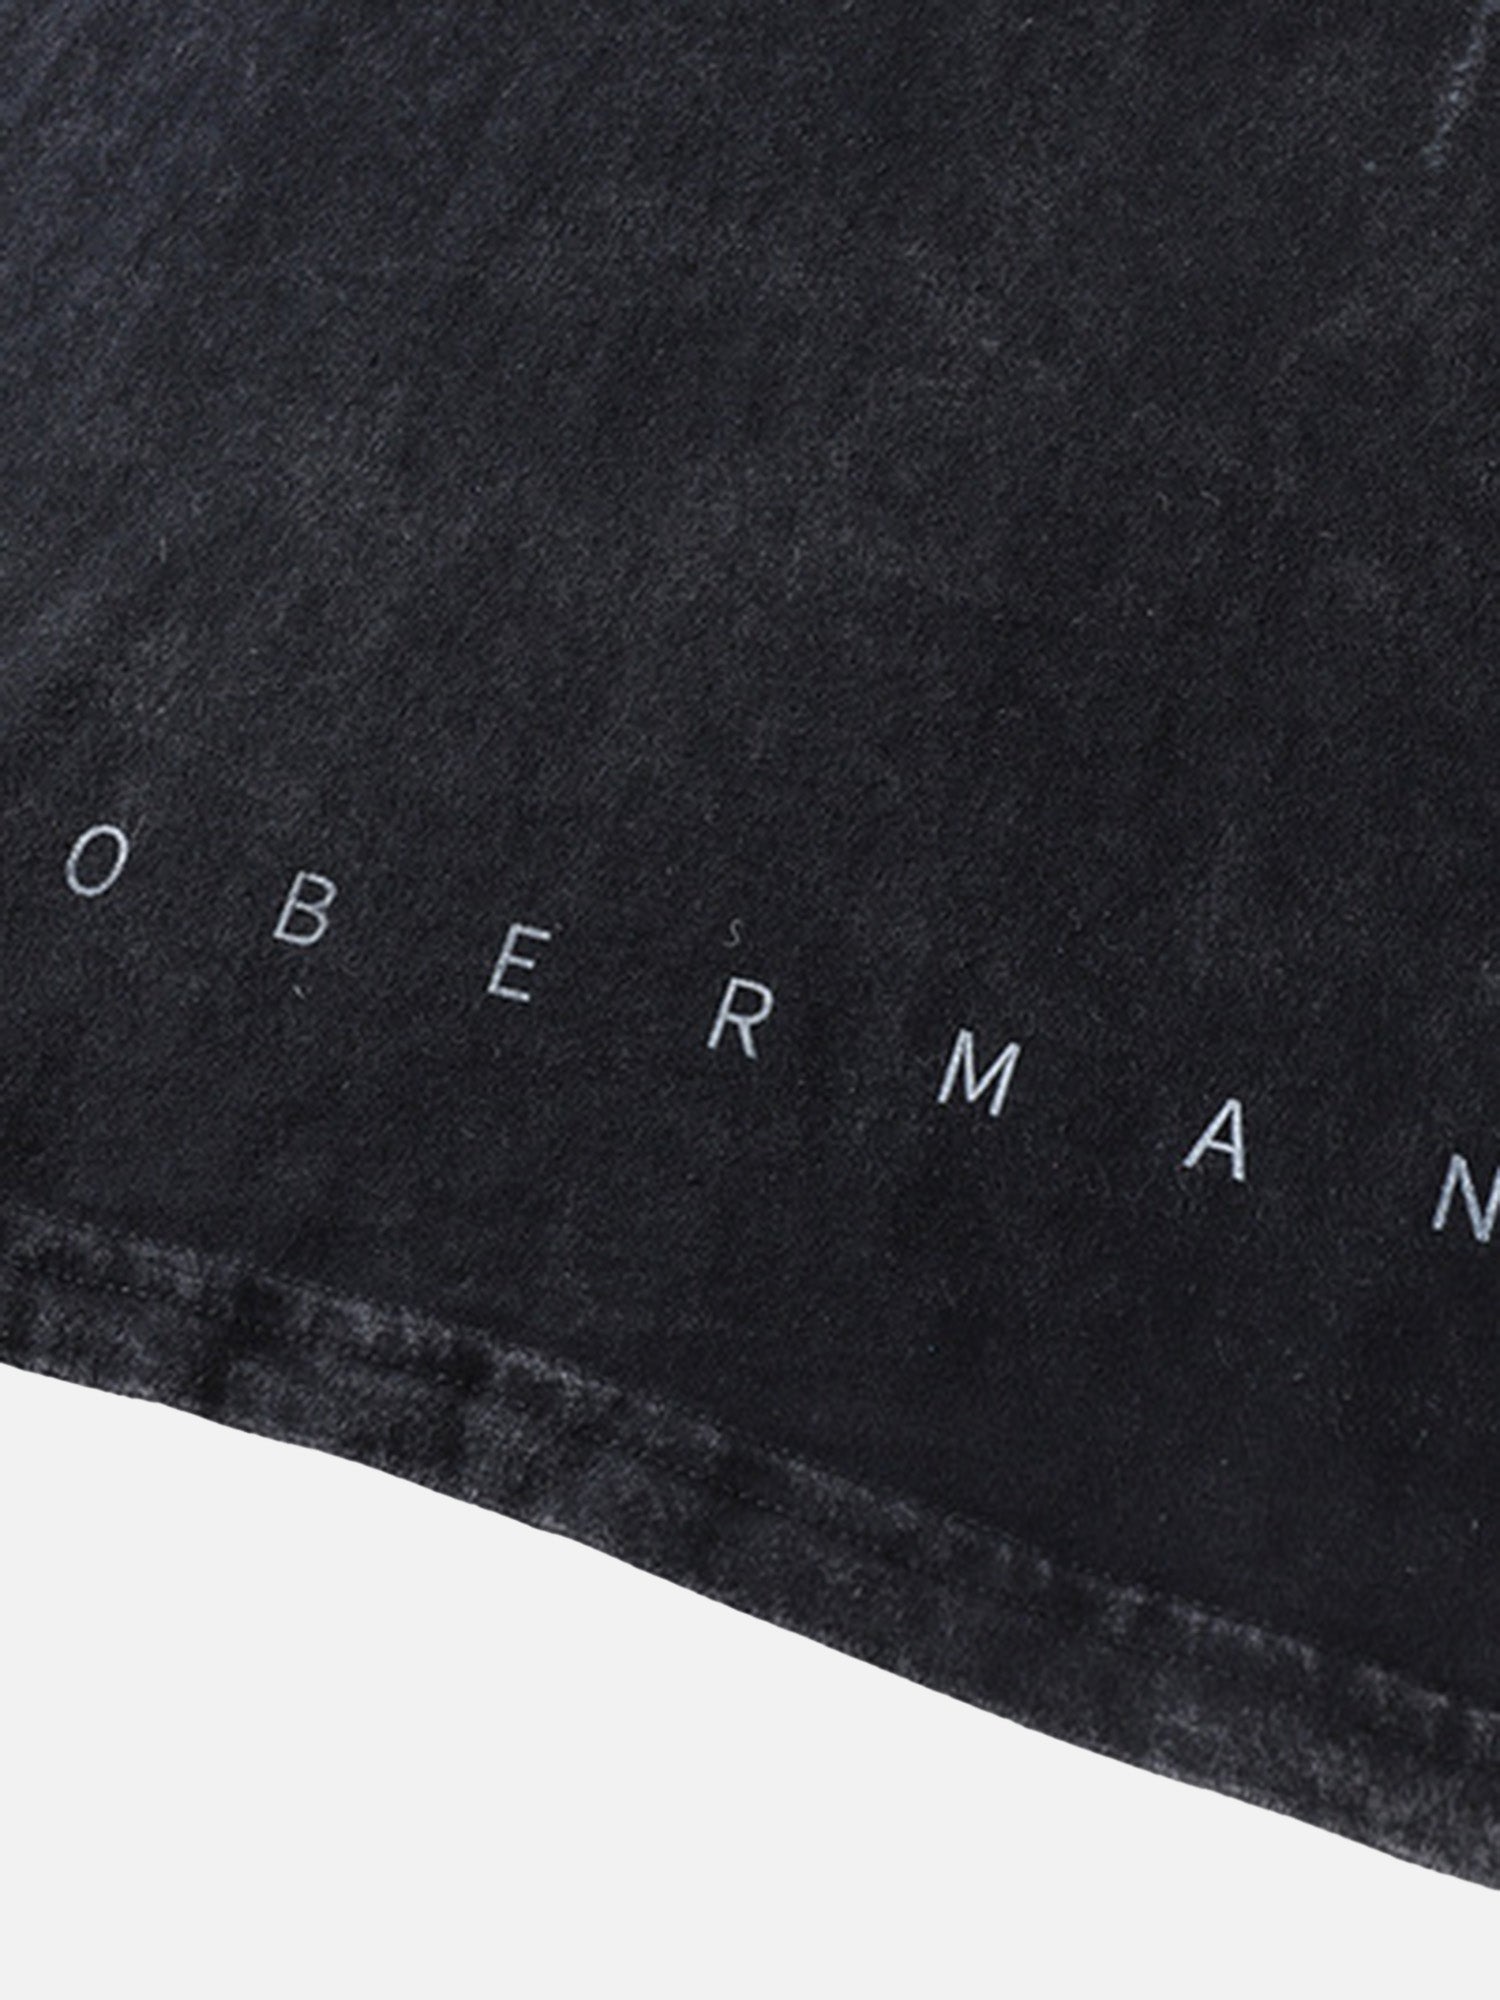 Thesupermade Retro Hip-hop Doberman Print T-shirt